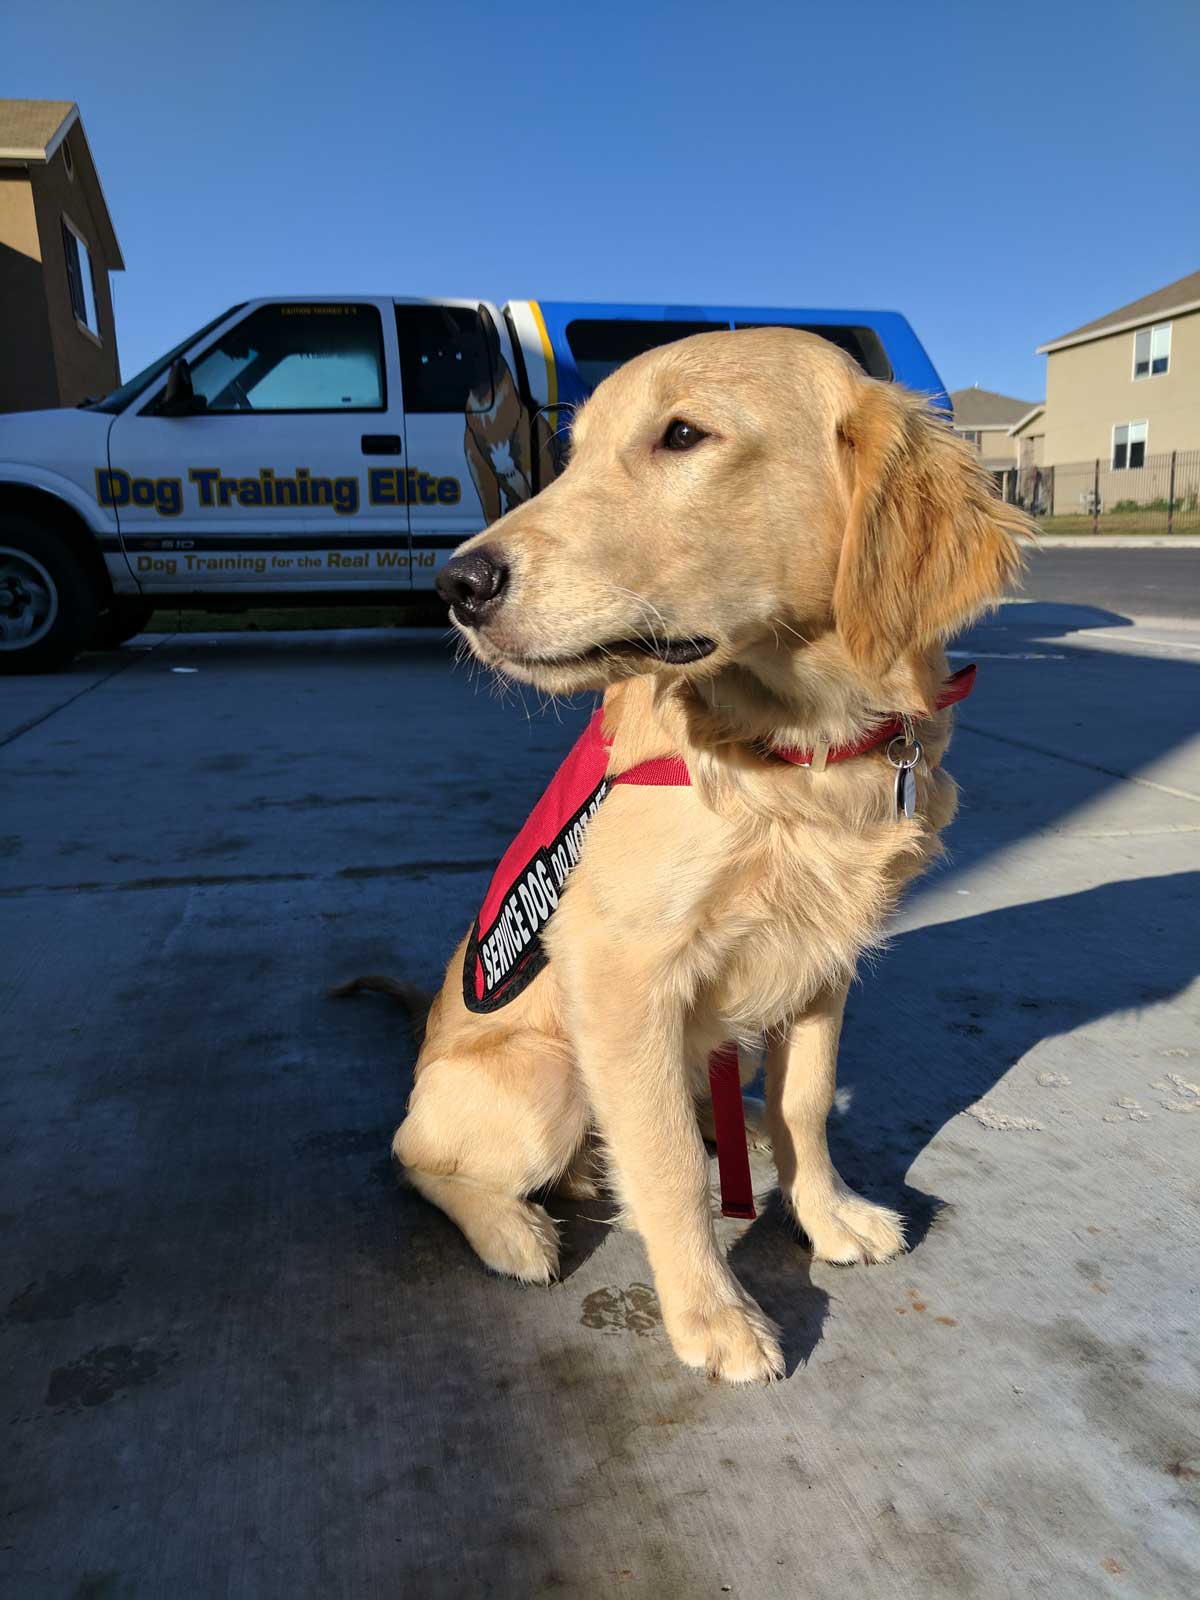 Dog Training Elite Shreveport is proud to have the highest rated service dog training programs near you in Shreveport / Bossier City.